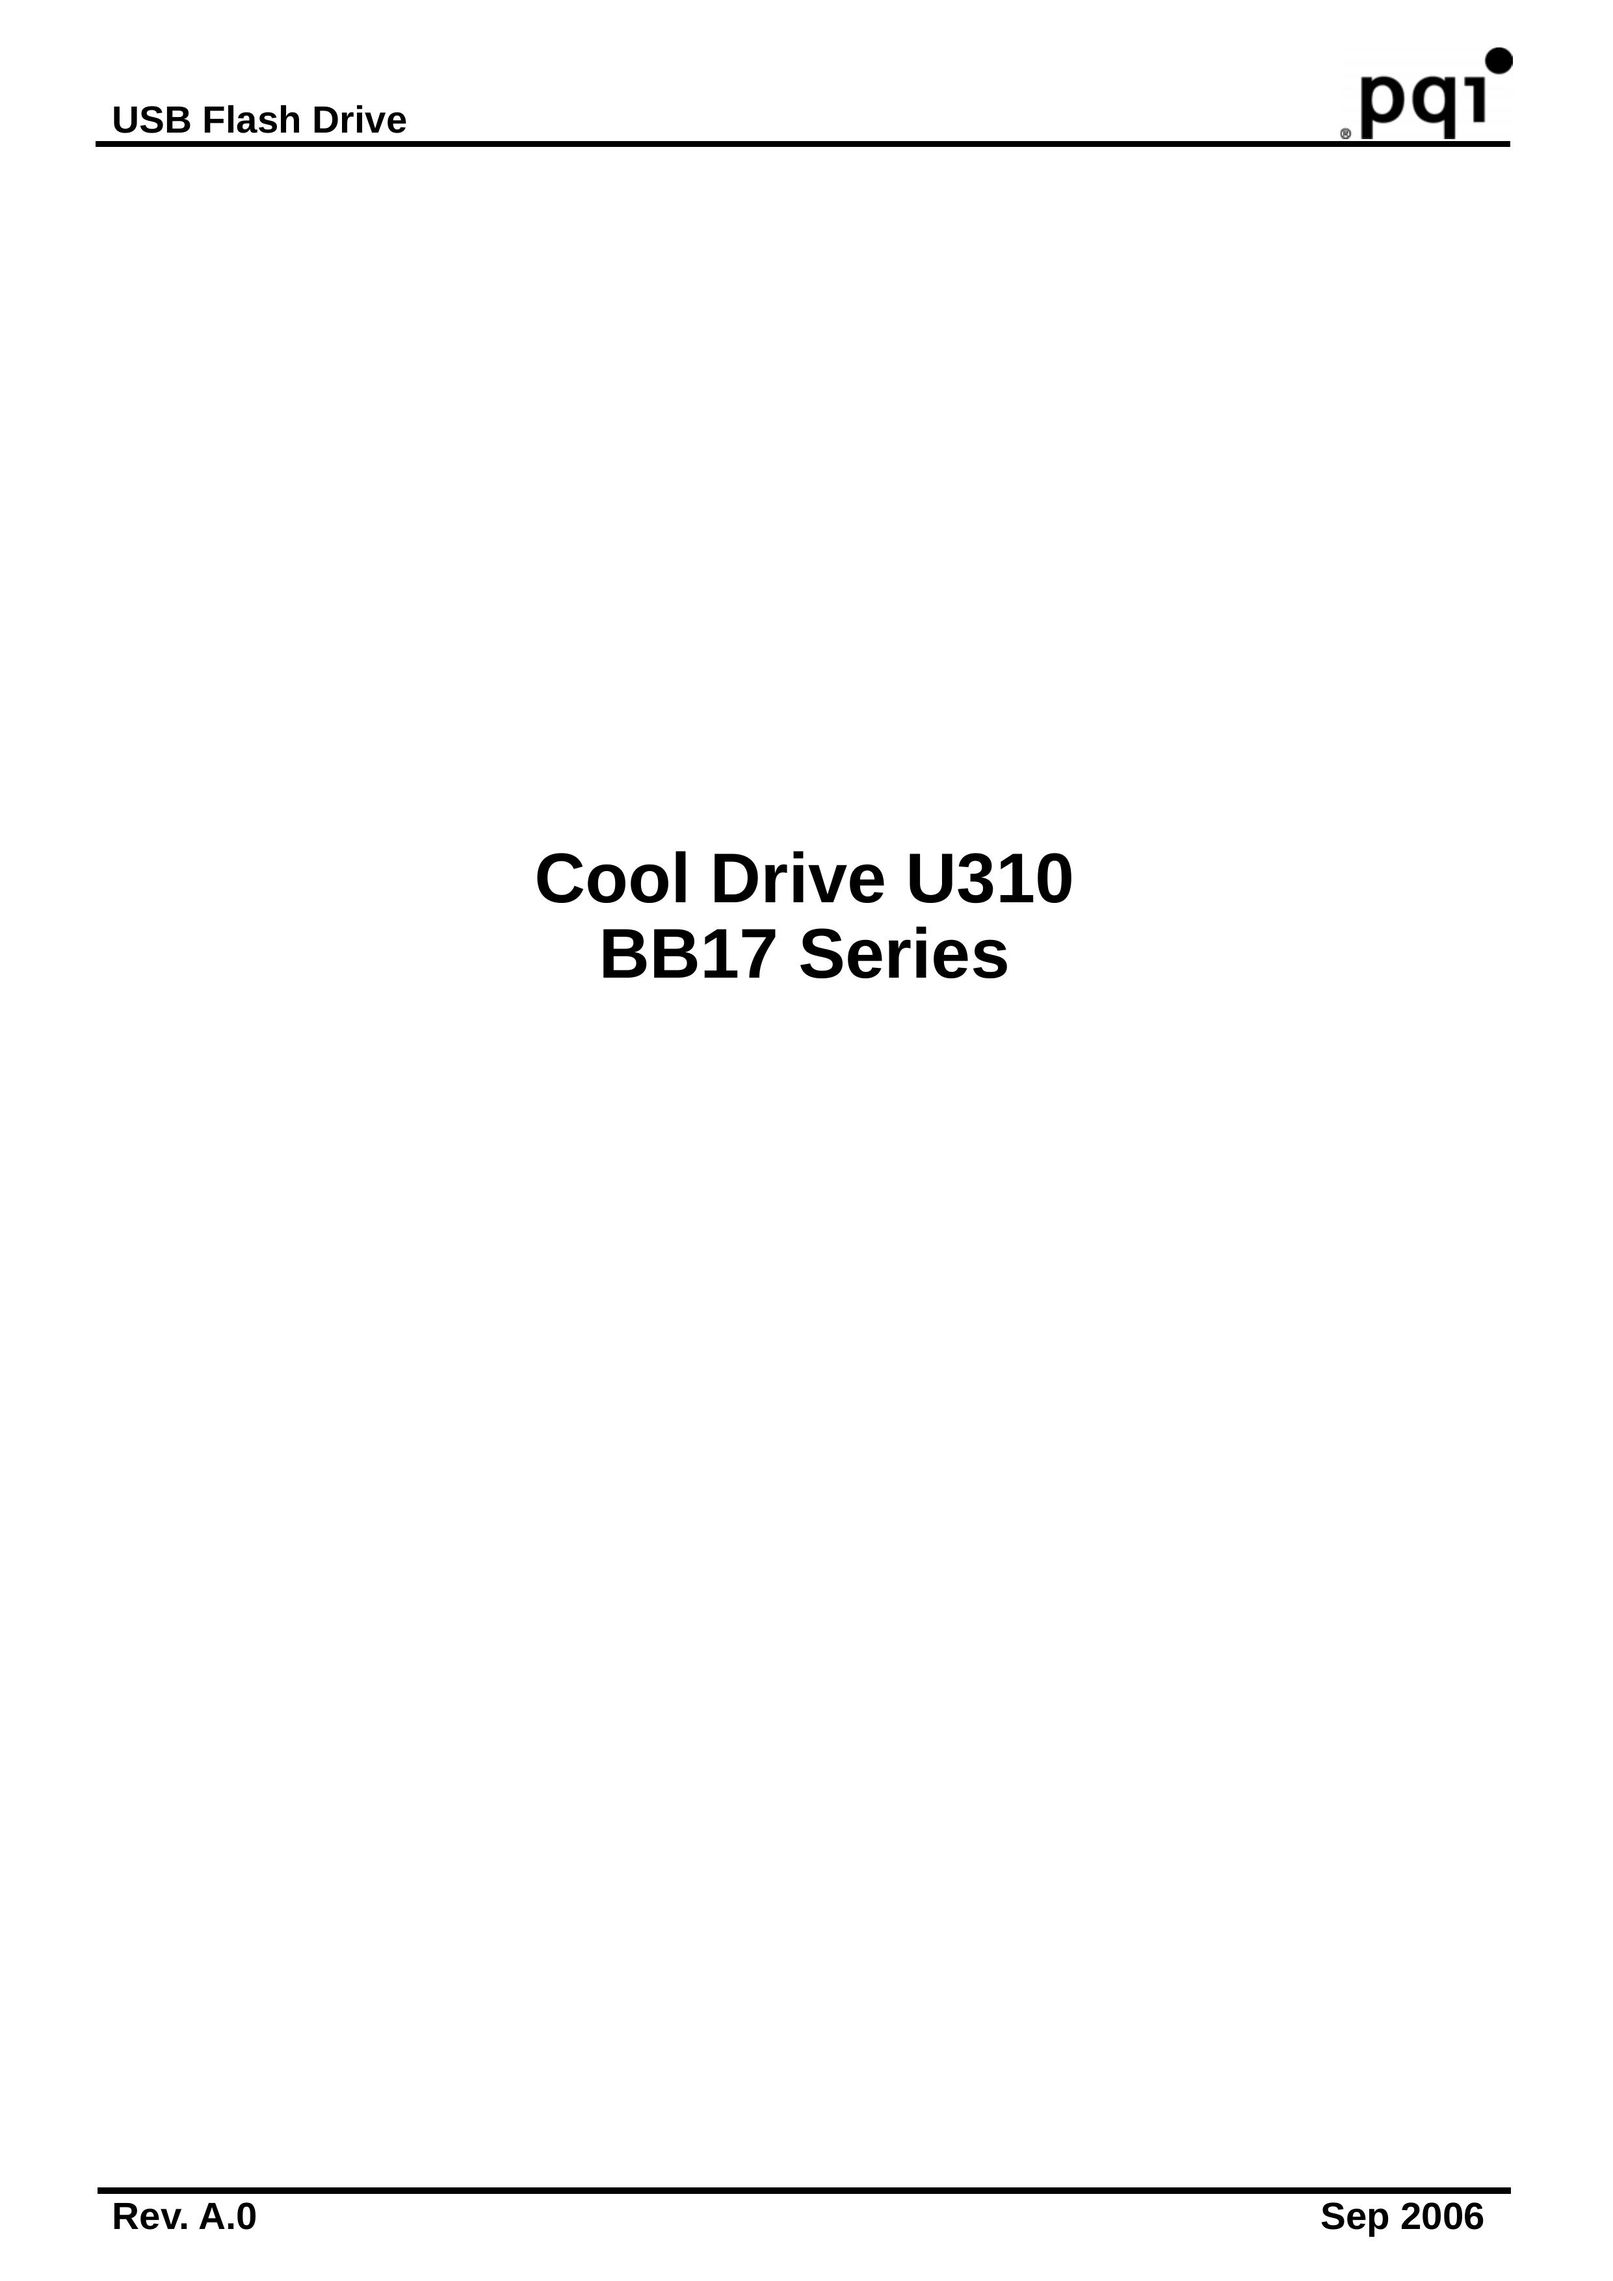 PQI U310 Computer Drive User Manual